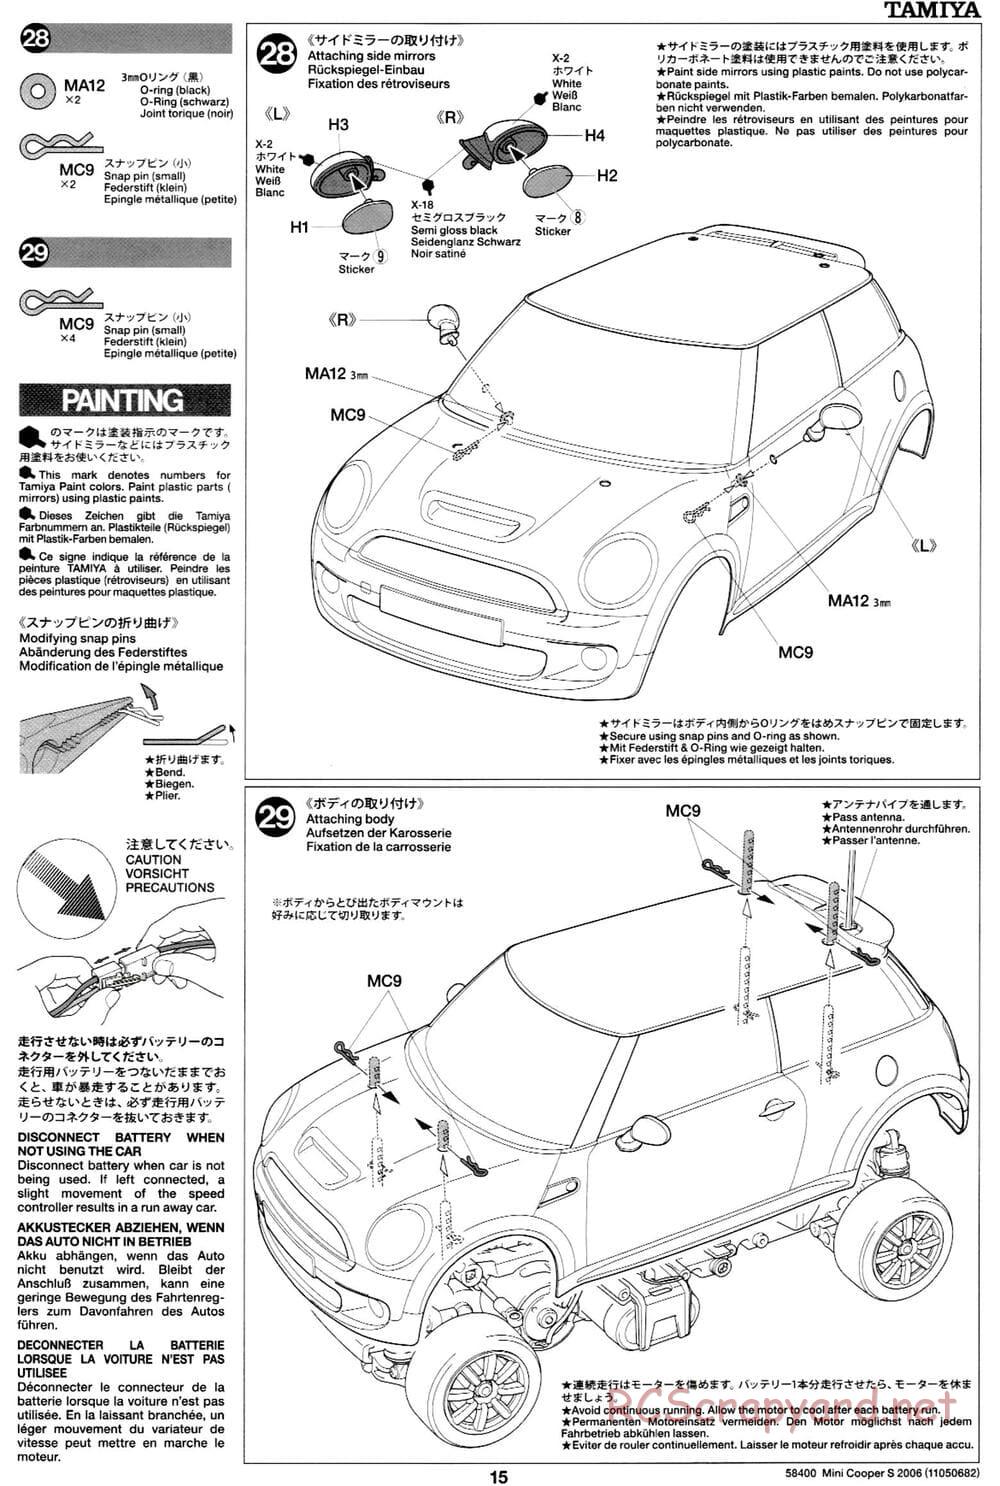 Tamiya - Mini Cooper S 2006 - M03L Chassis - Manual - Page 15